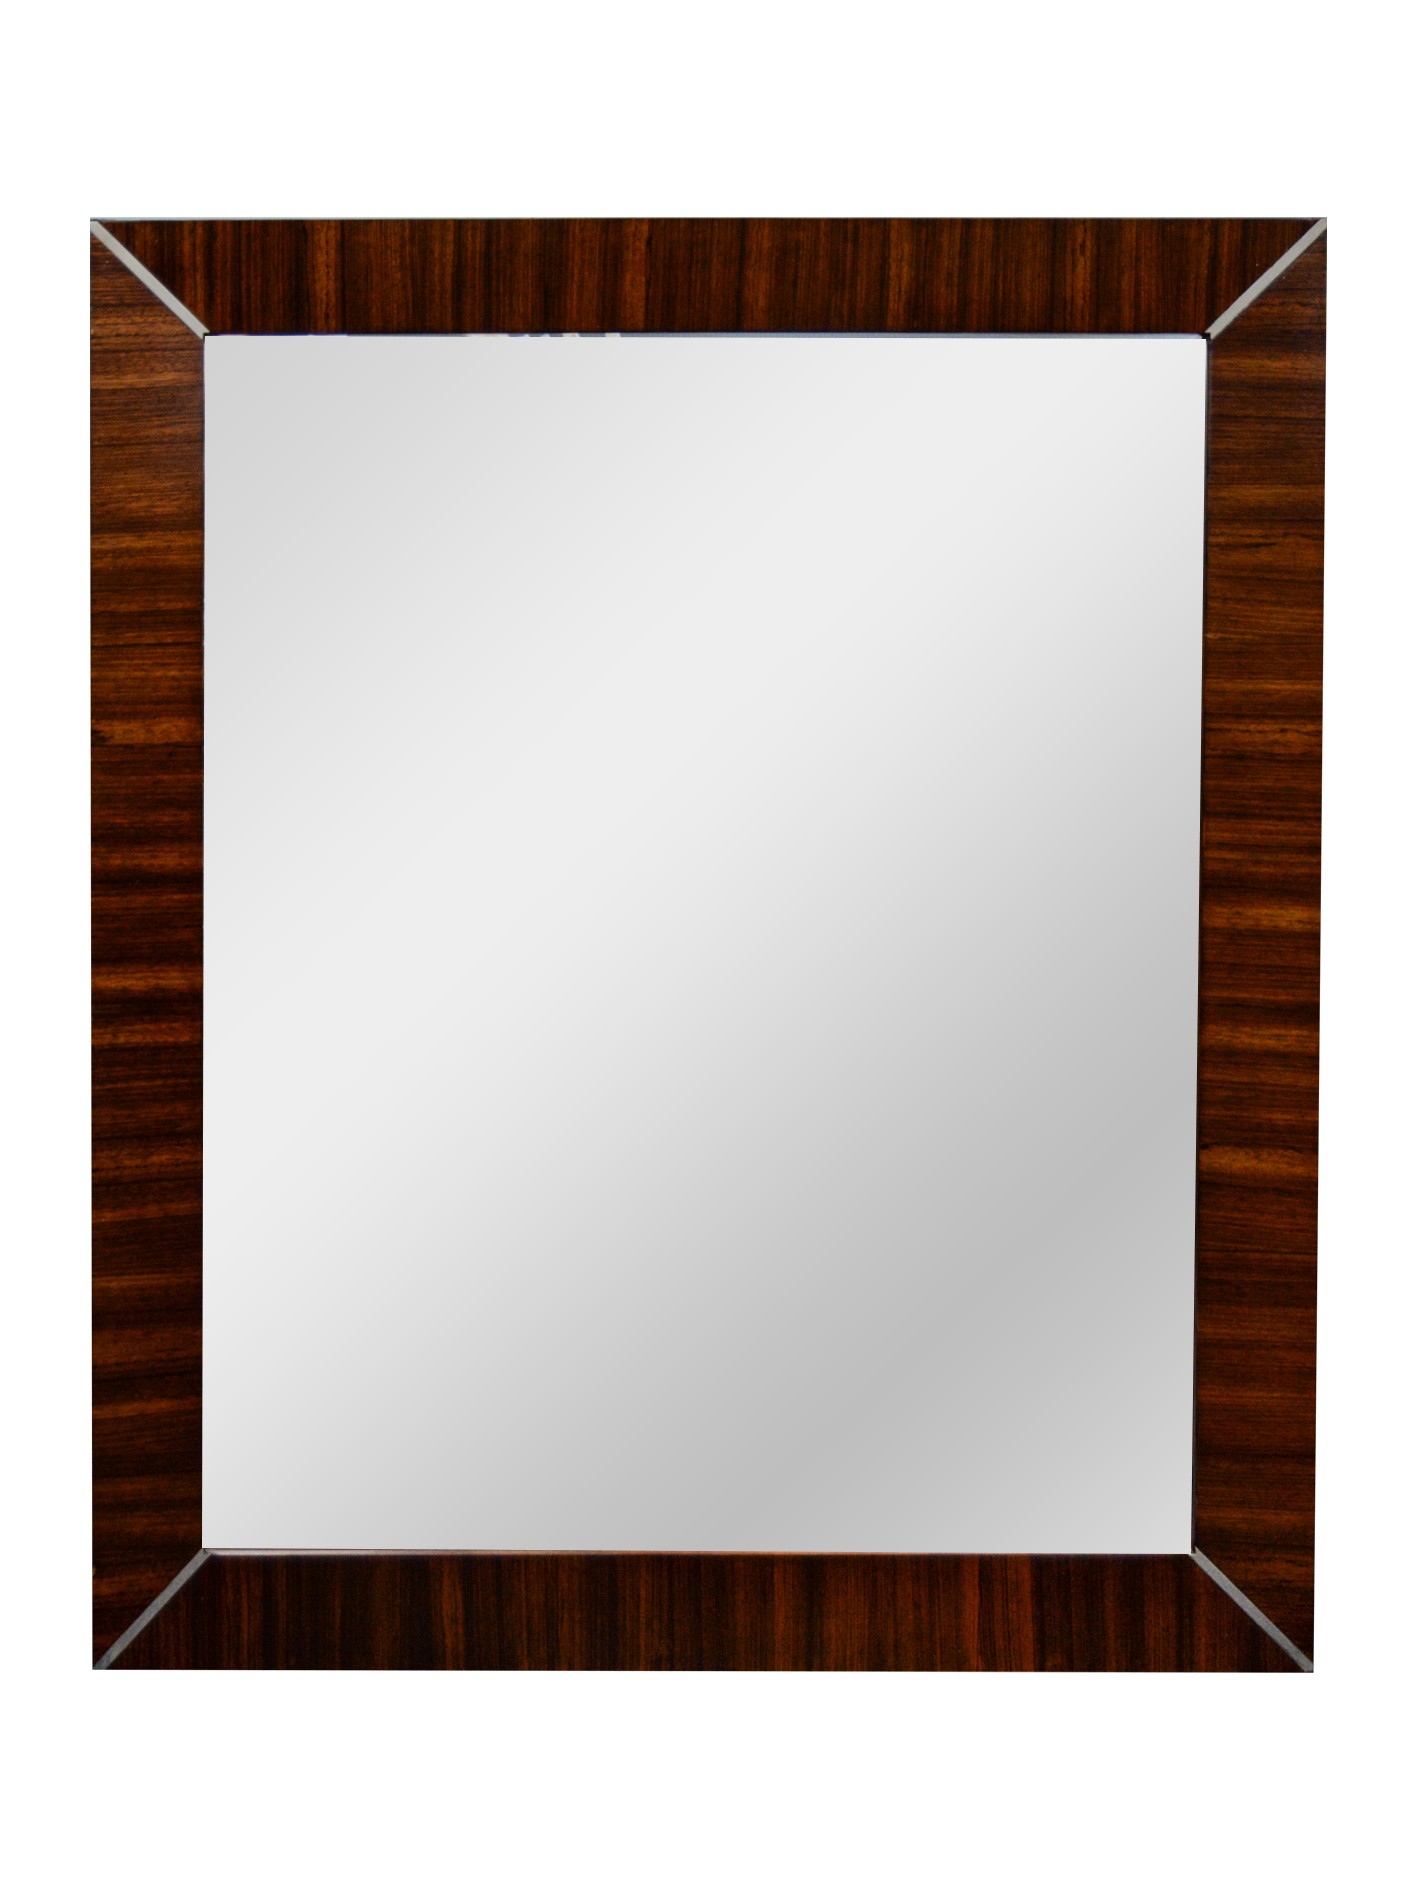 STYLISH MODERN TOLA WOOD BEVEL EDGED WALL MIRROR, with chamfered frame, 52” x 44” (132cm x 111.8cm),